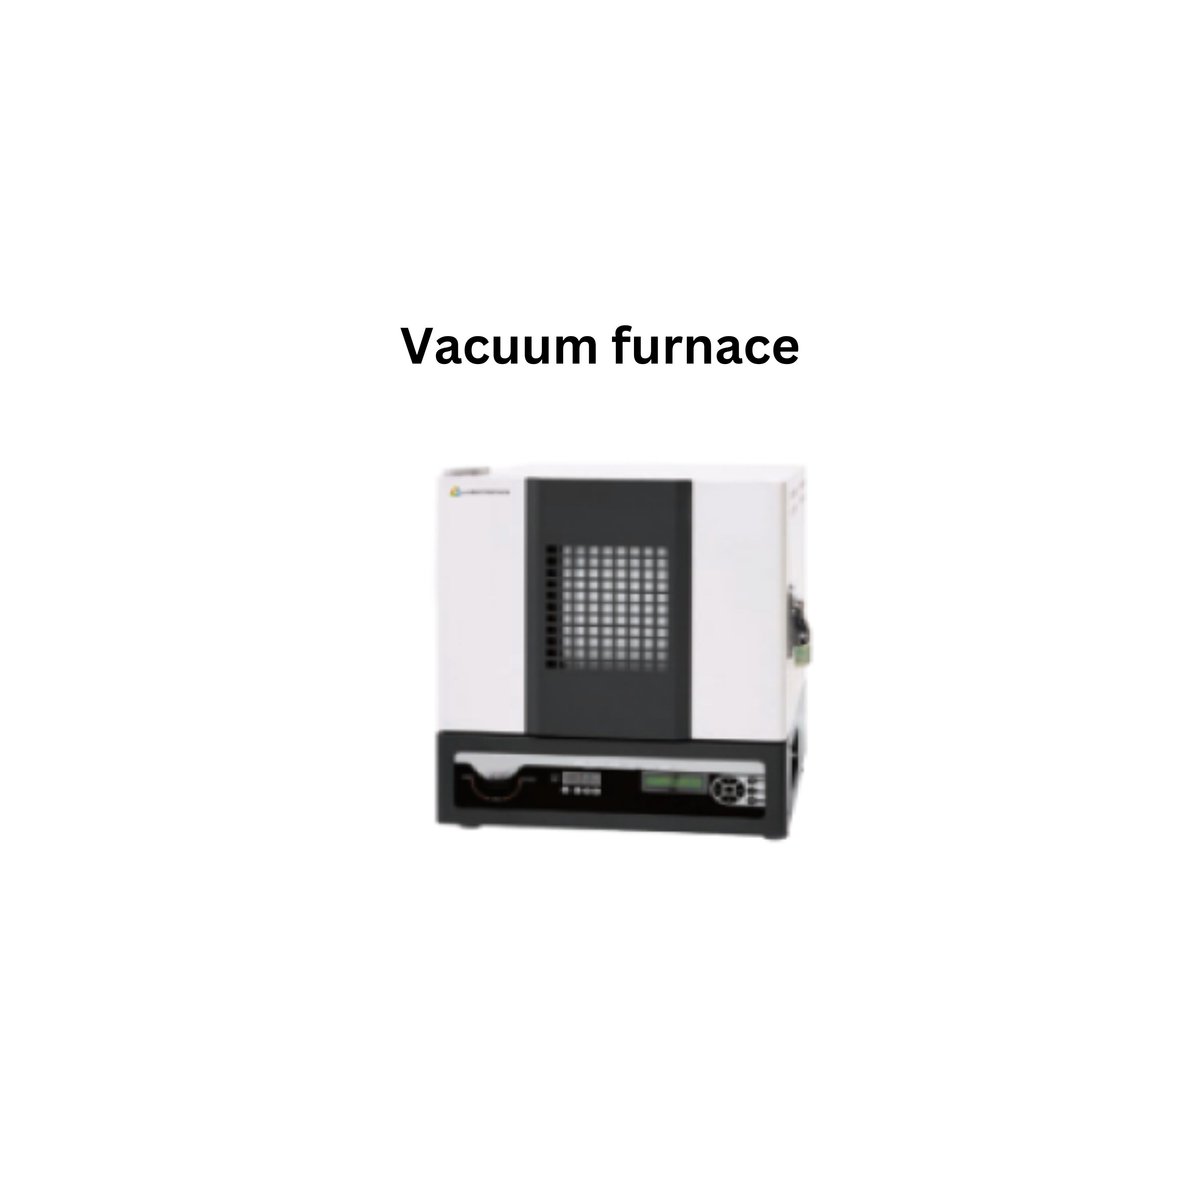 Vacuum furnace.jpg